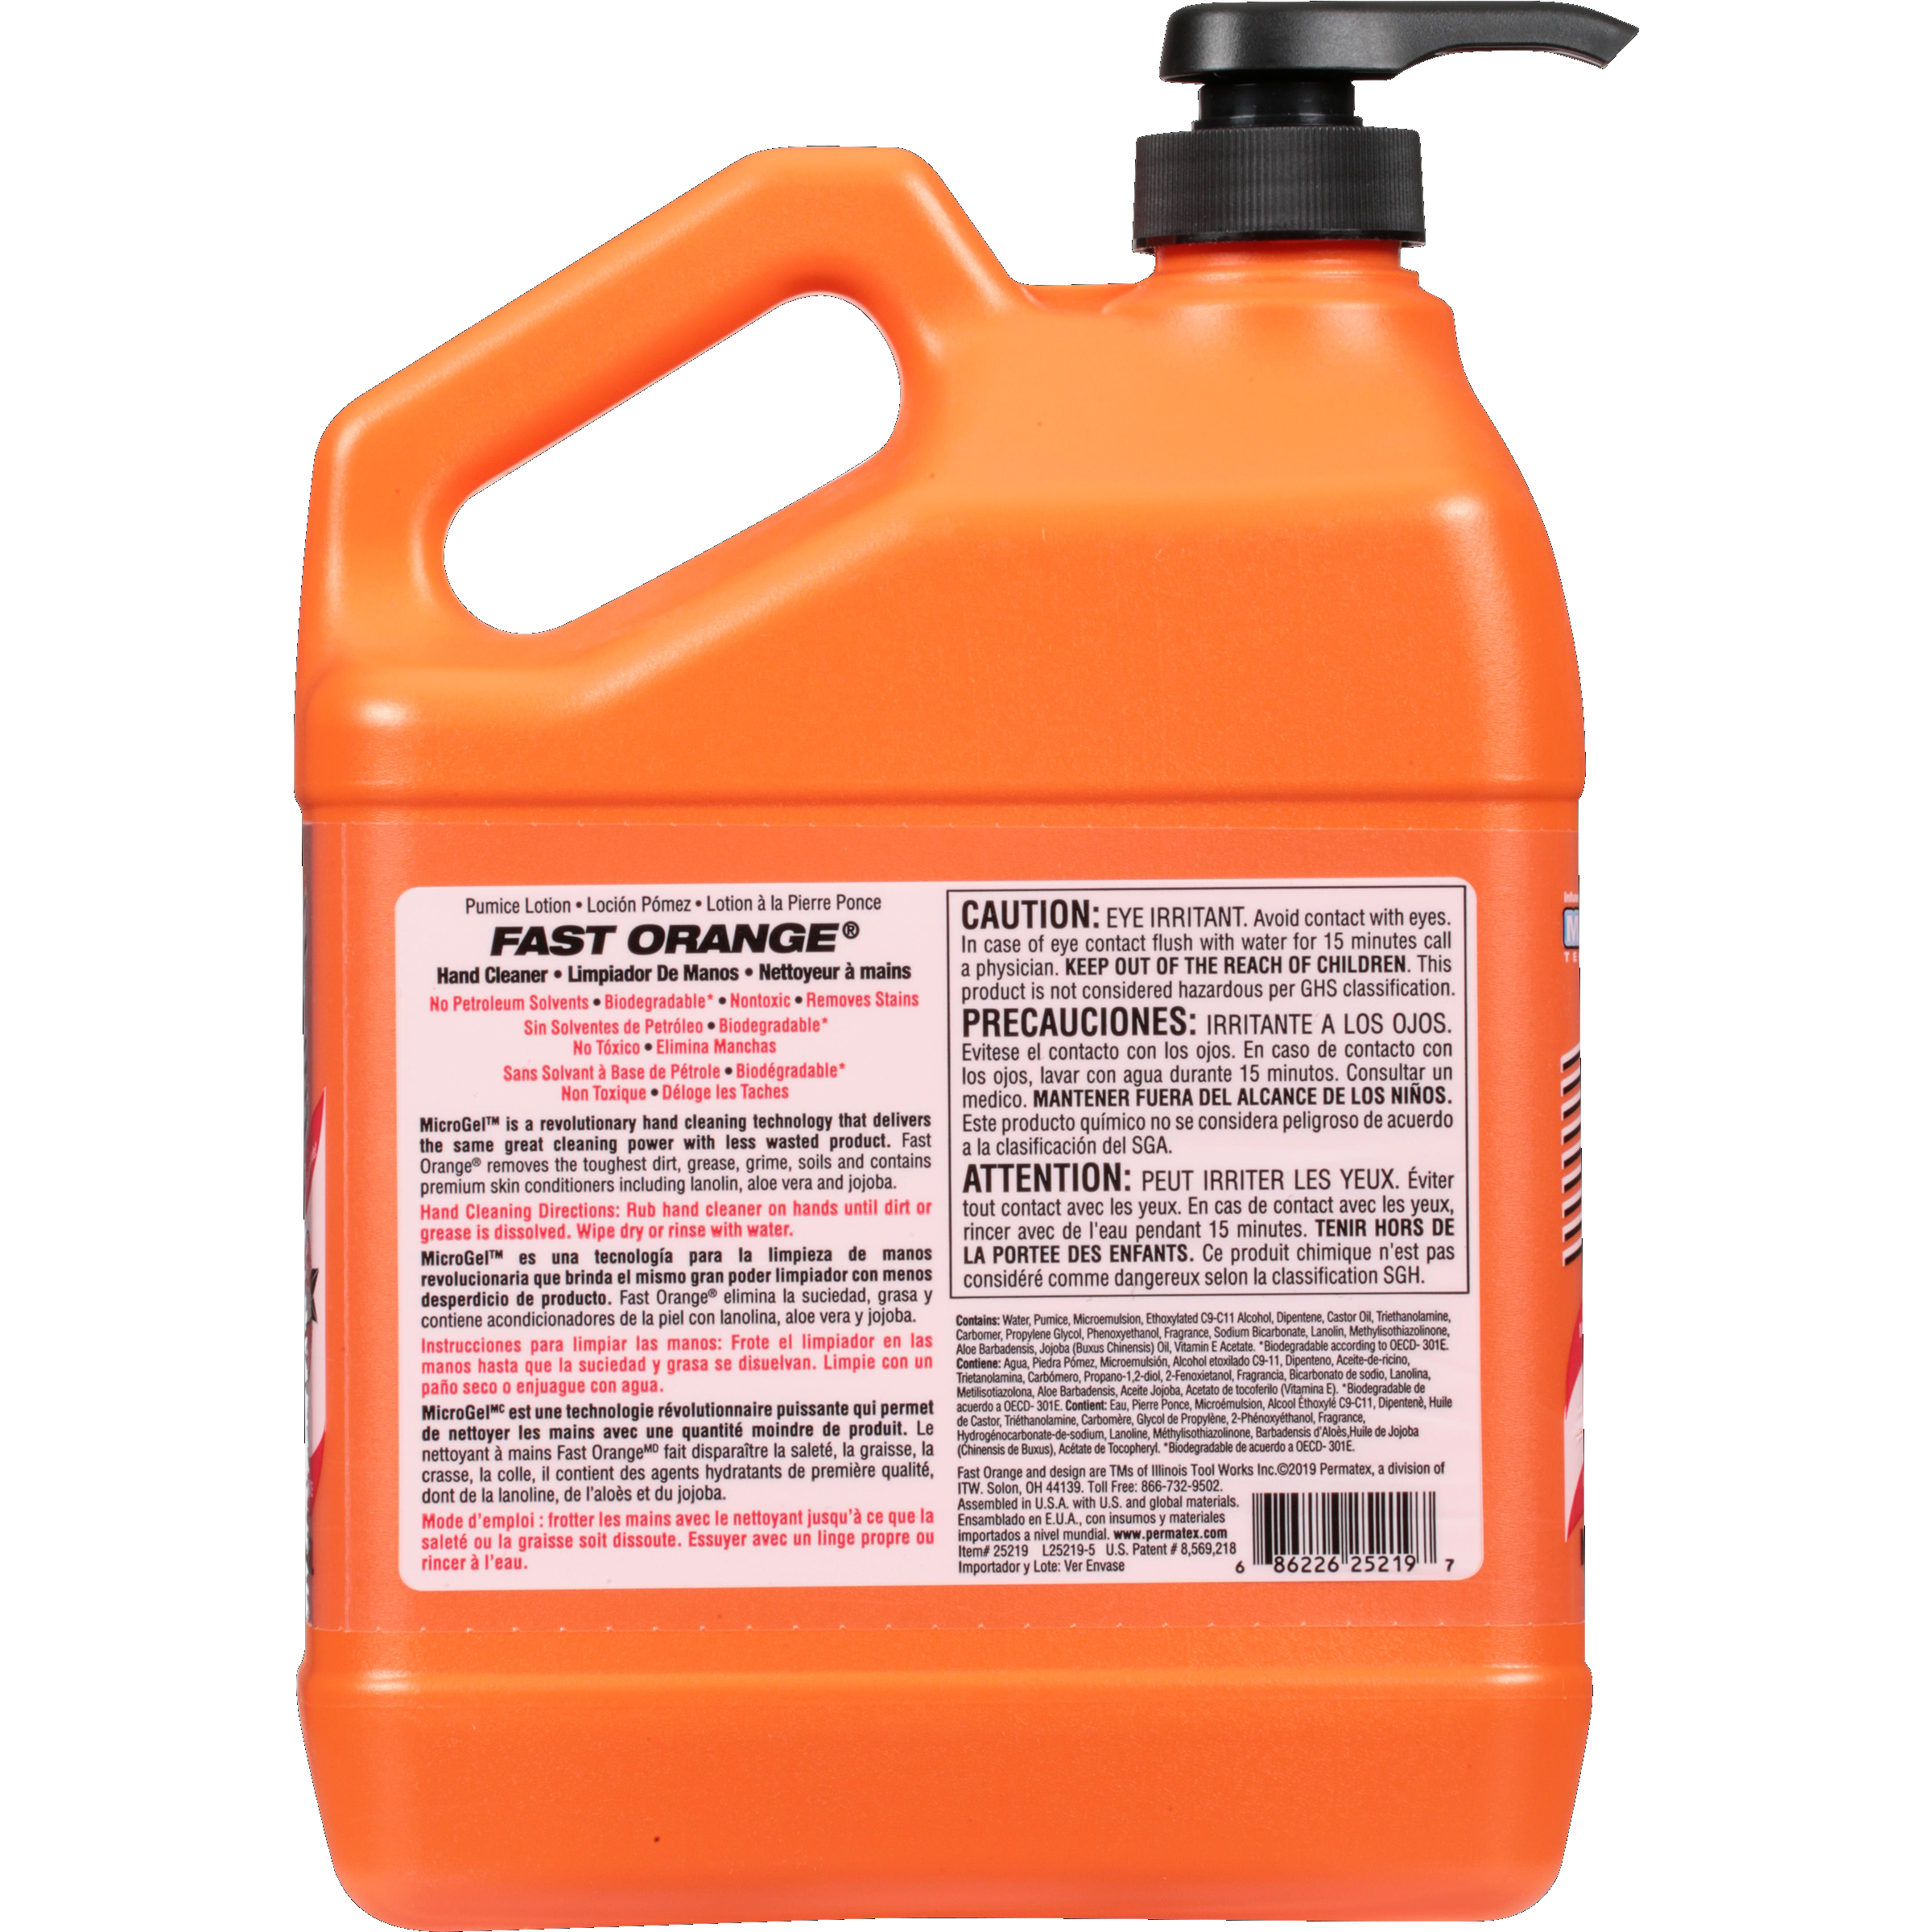 Fast Orange Waterless Pumice Lotion Hand Cleaner, Natural Citrus, 1 gal.